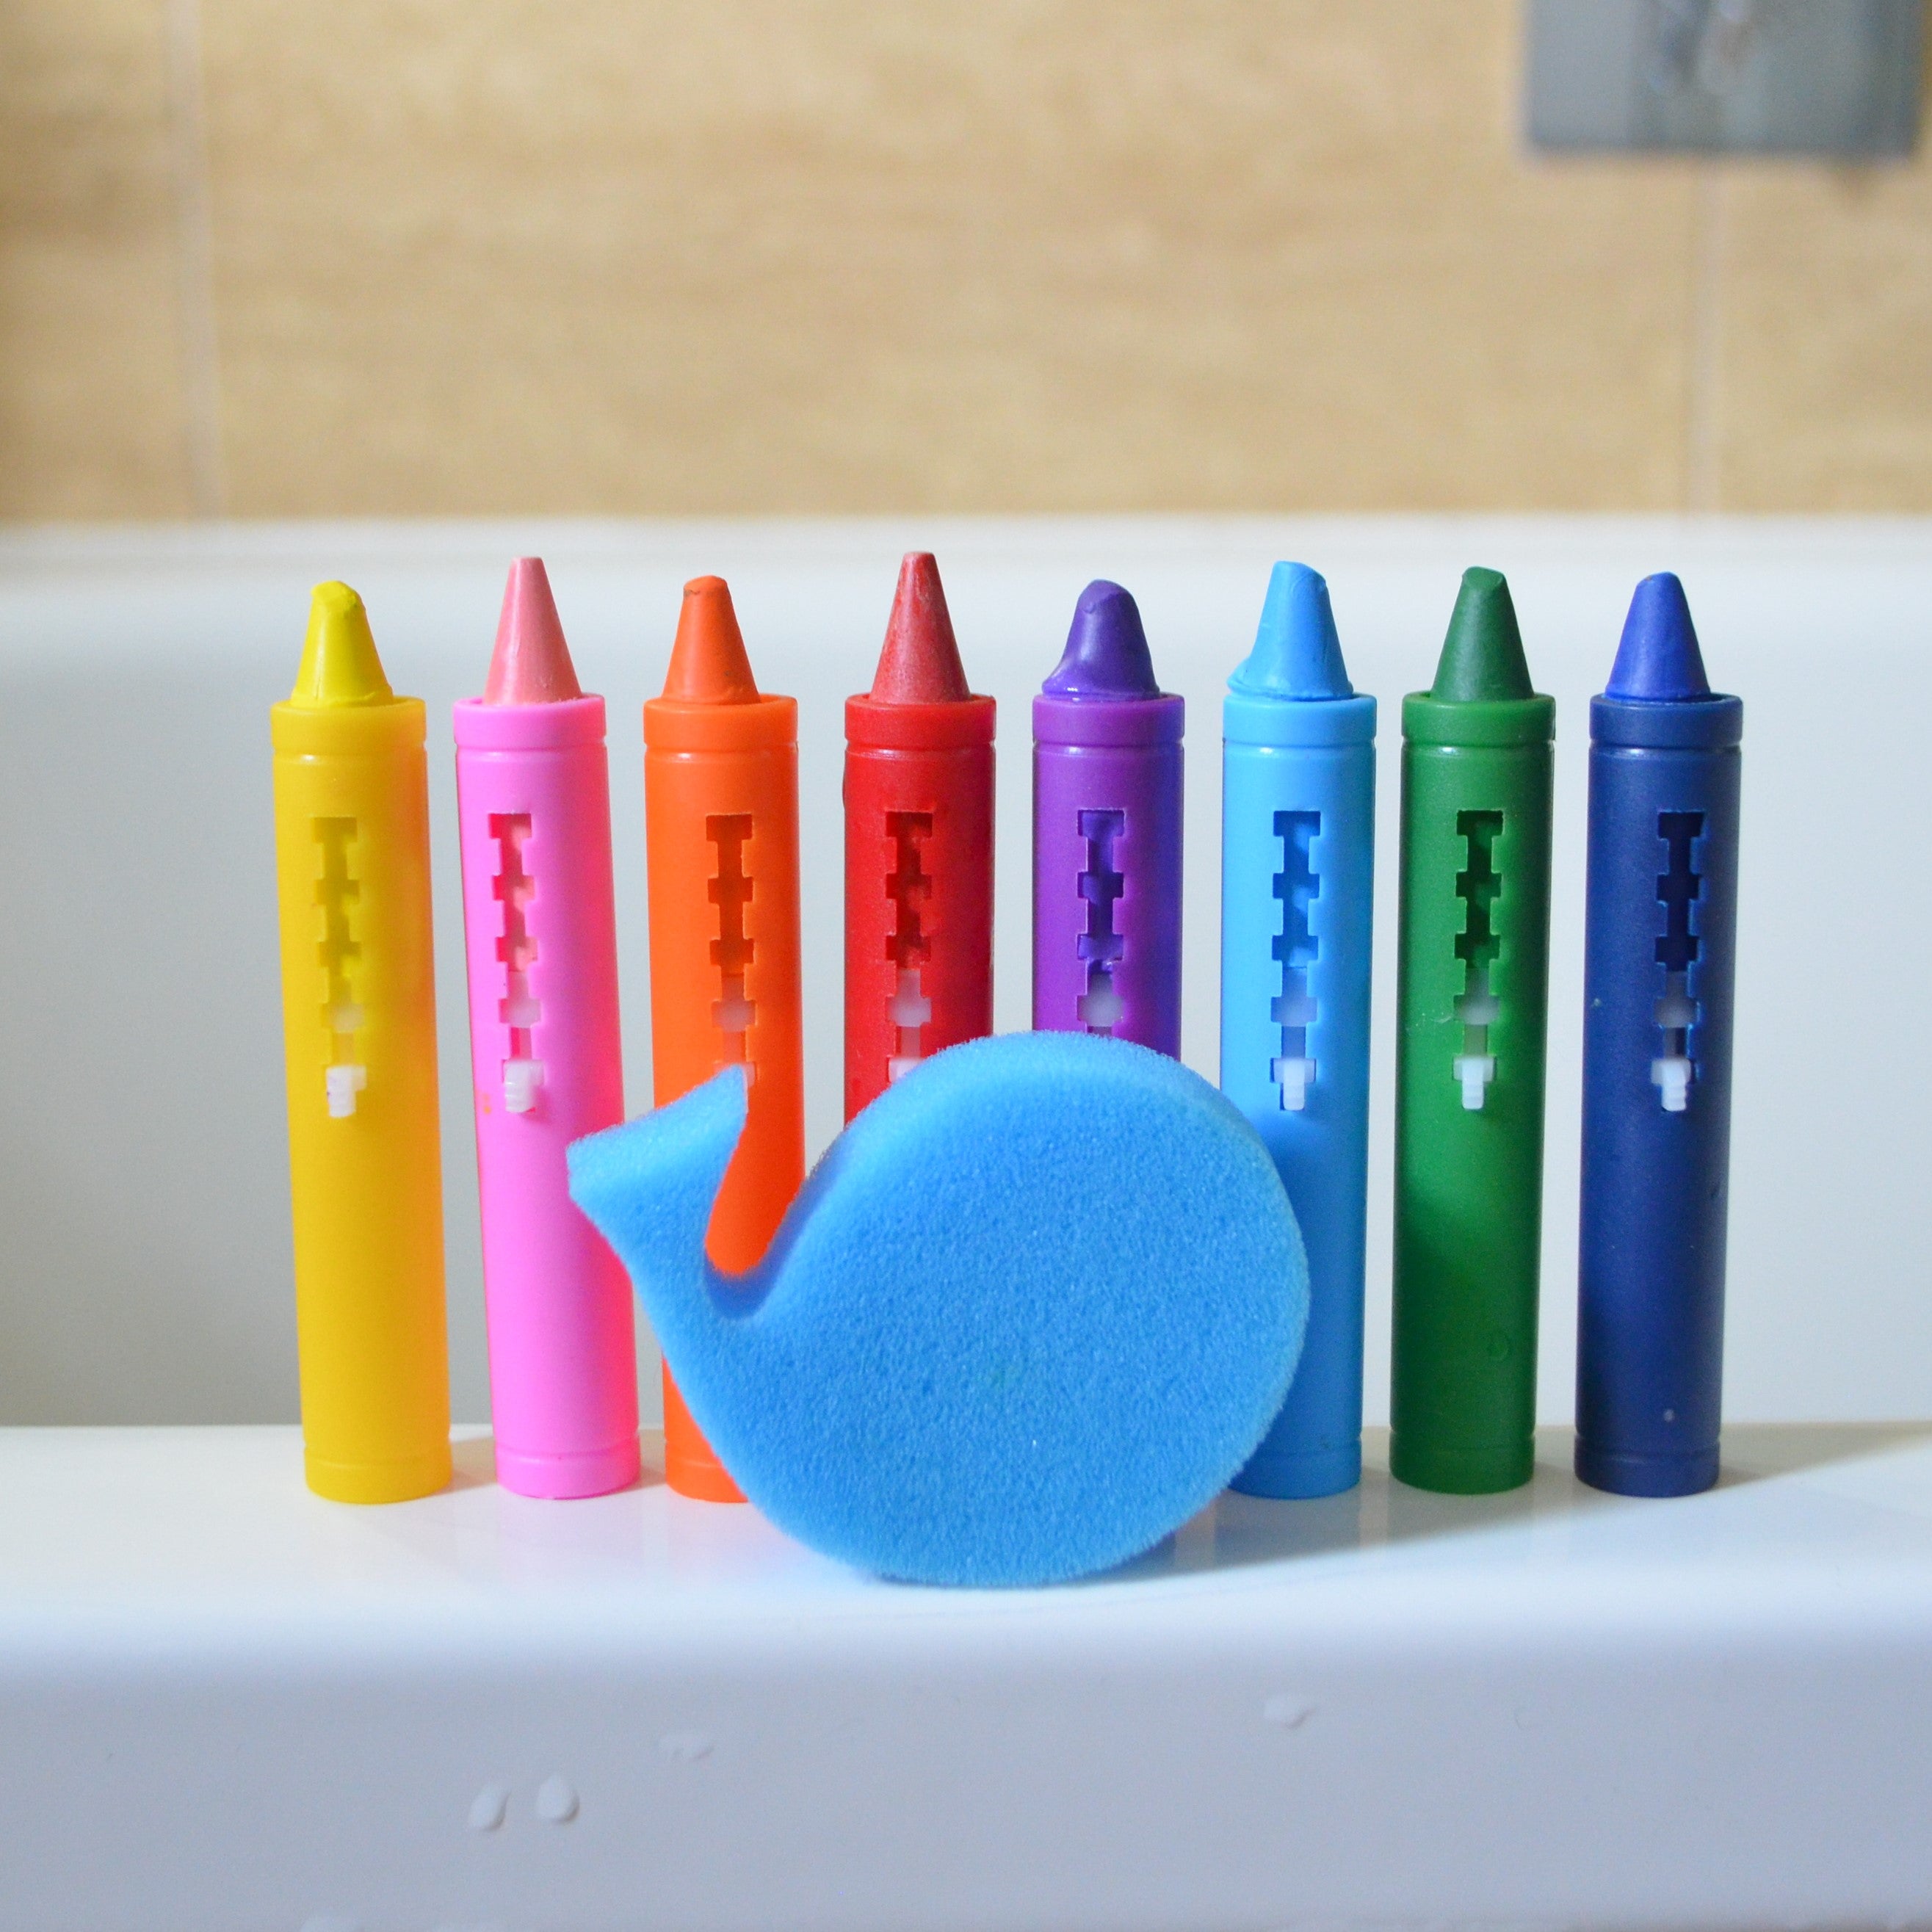 8 Bath Crayons - Crayons pour le bain